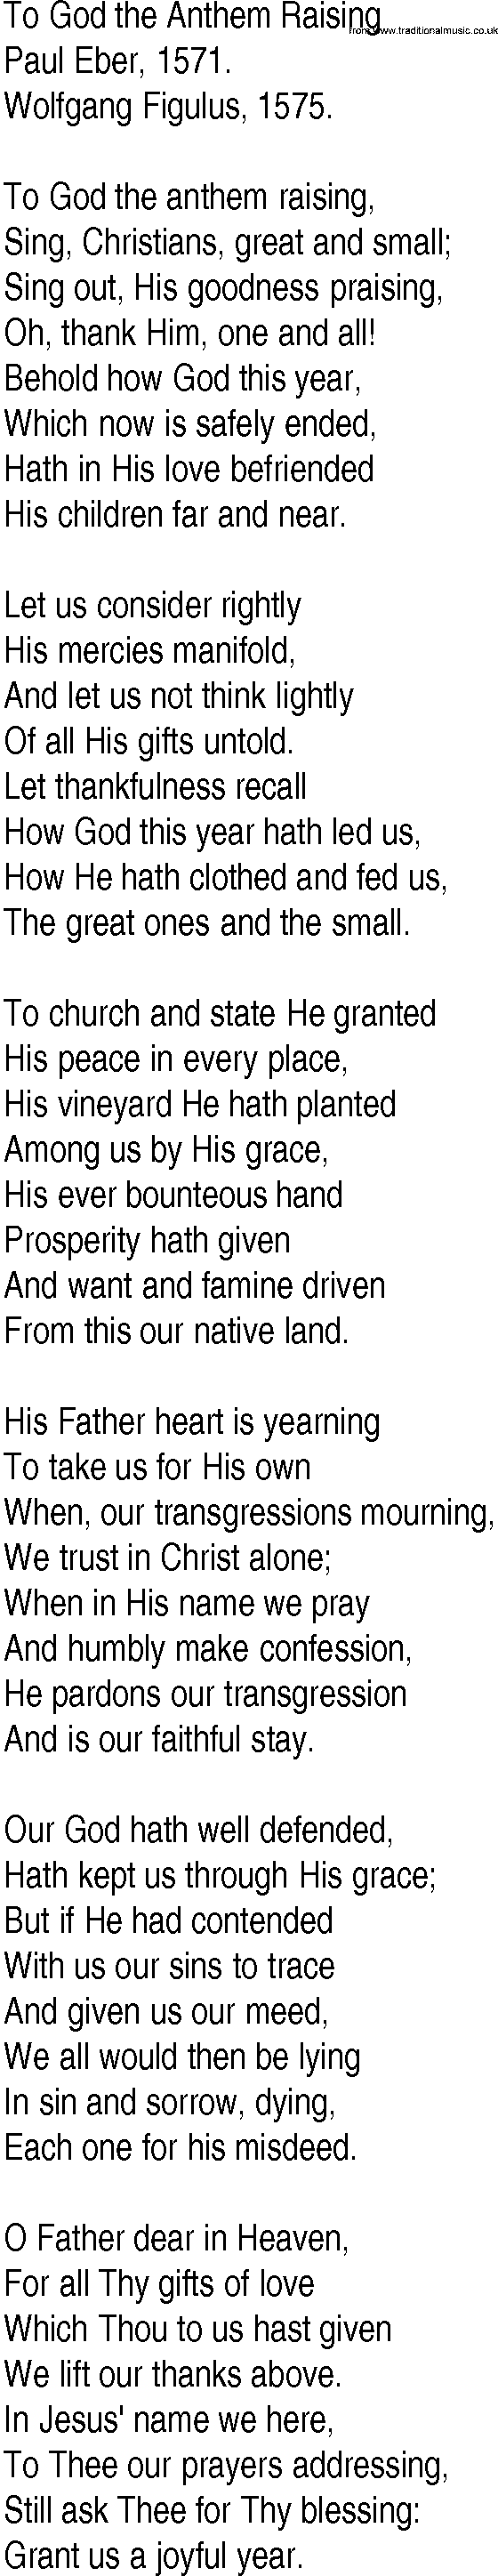 Hymn and Gospel Song: To God the Anthem Raising by Paul Eber lyrics